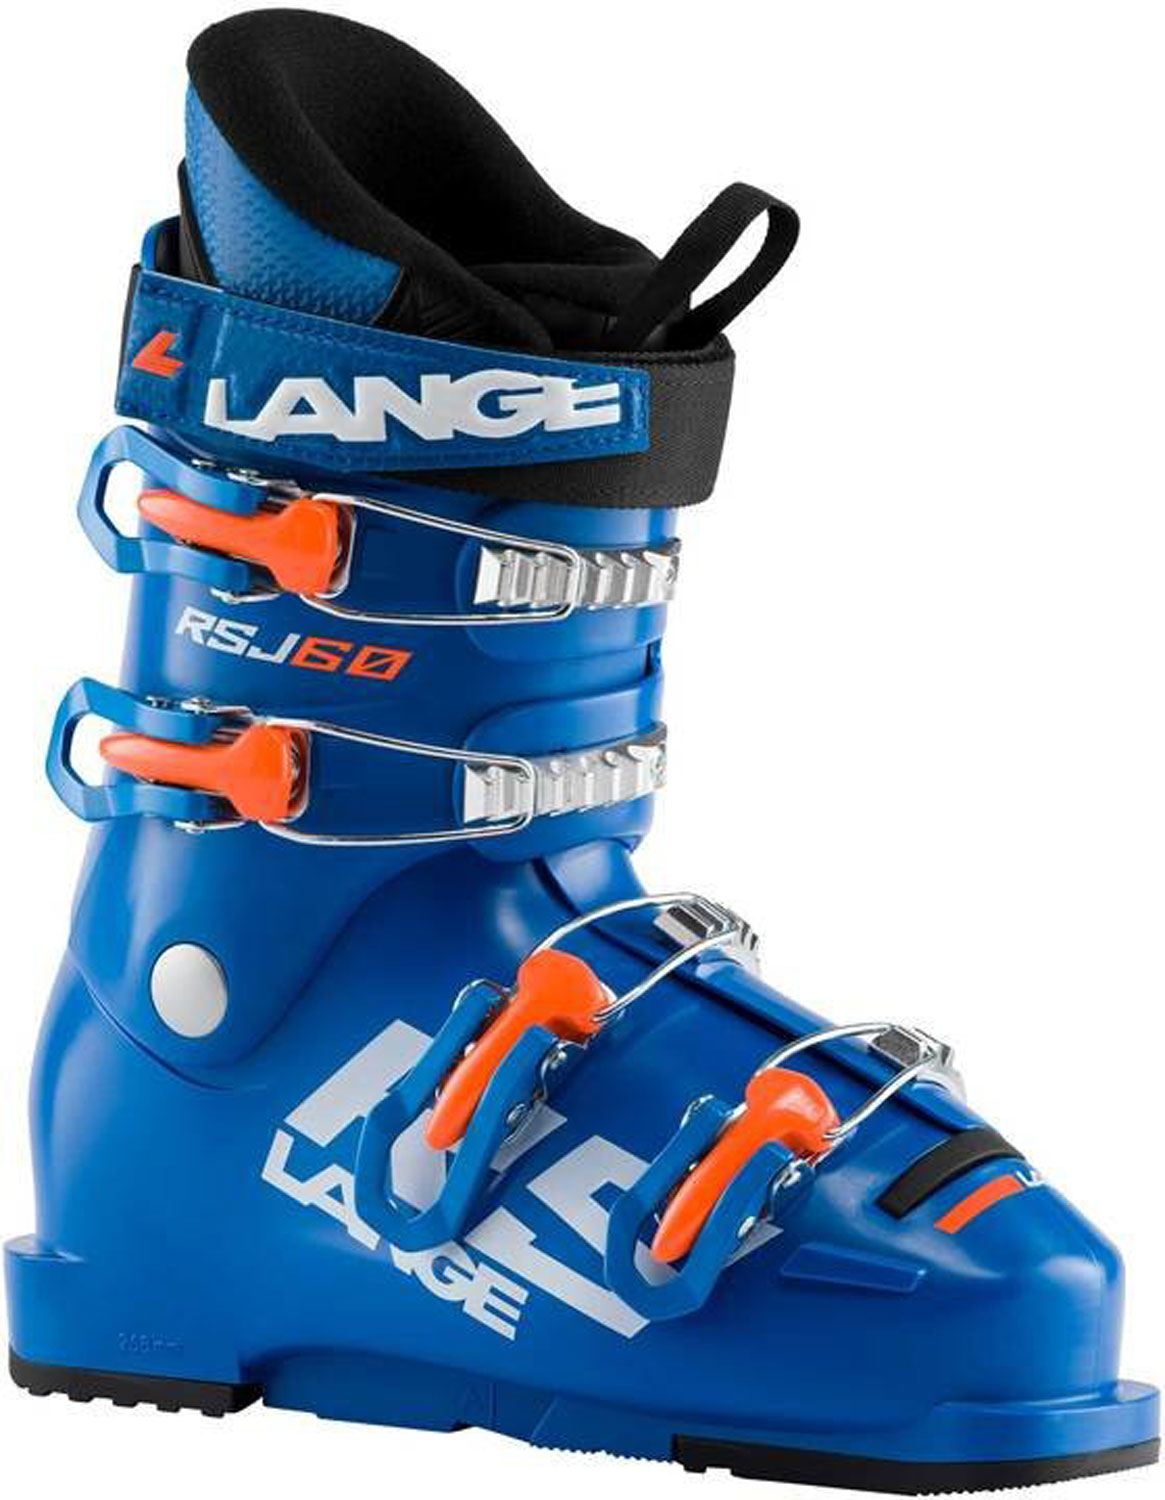 Juniorská lyžařská obuv